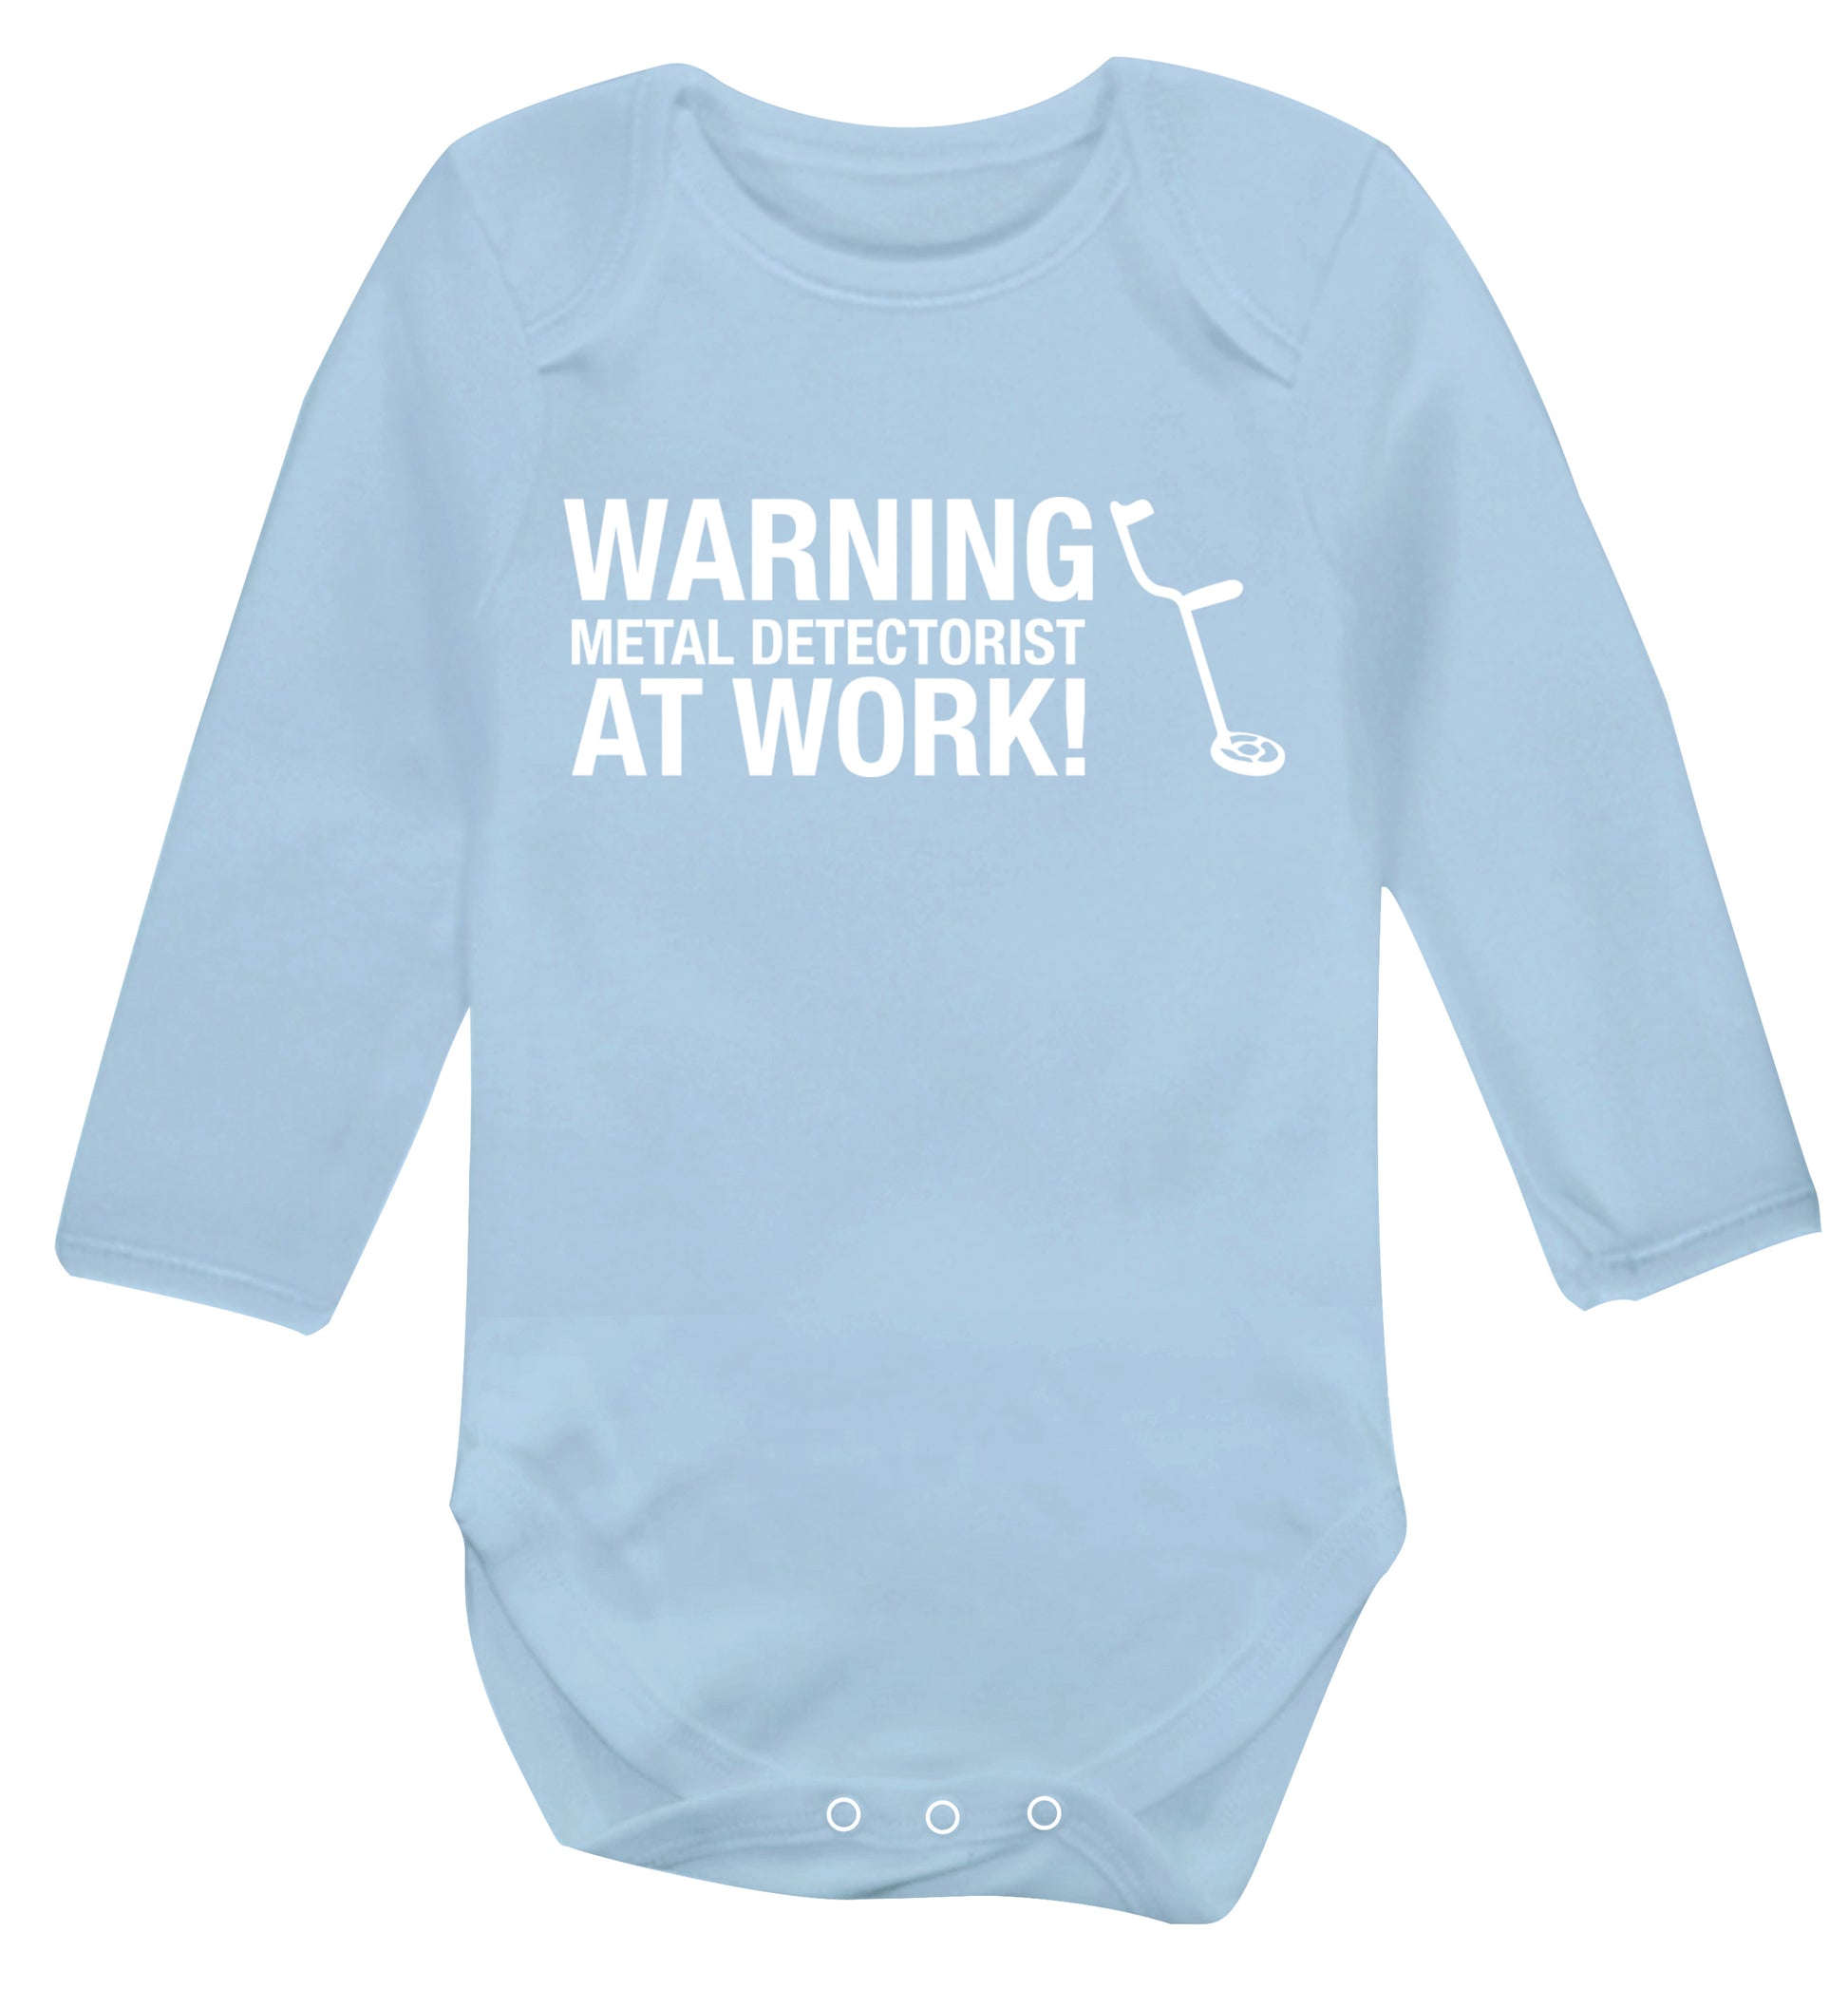 Warning metal detectorist at work! Baby Vest long sleeved pale blue 6-12 months